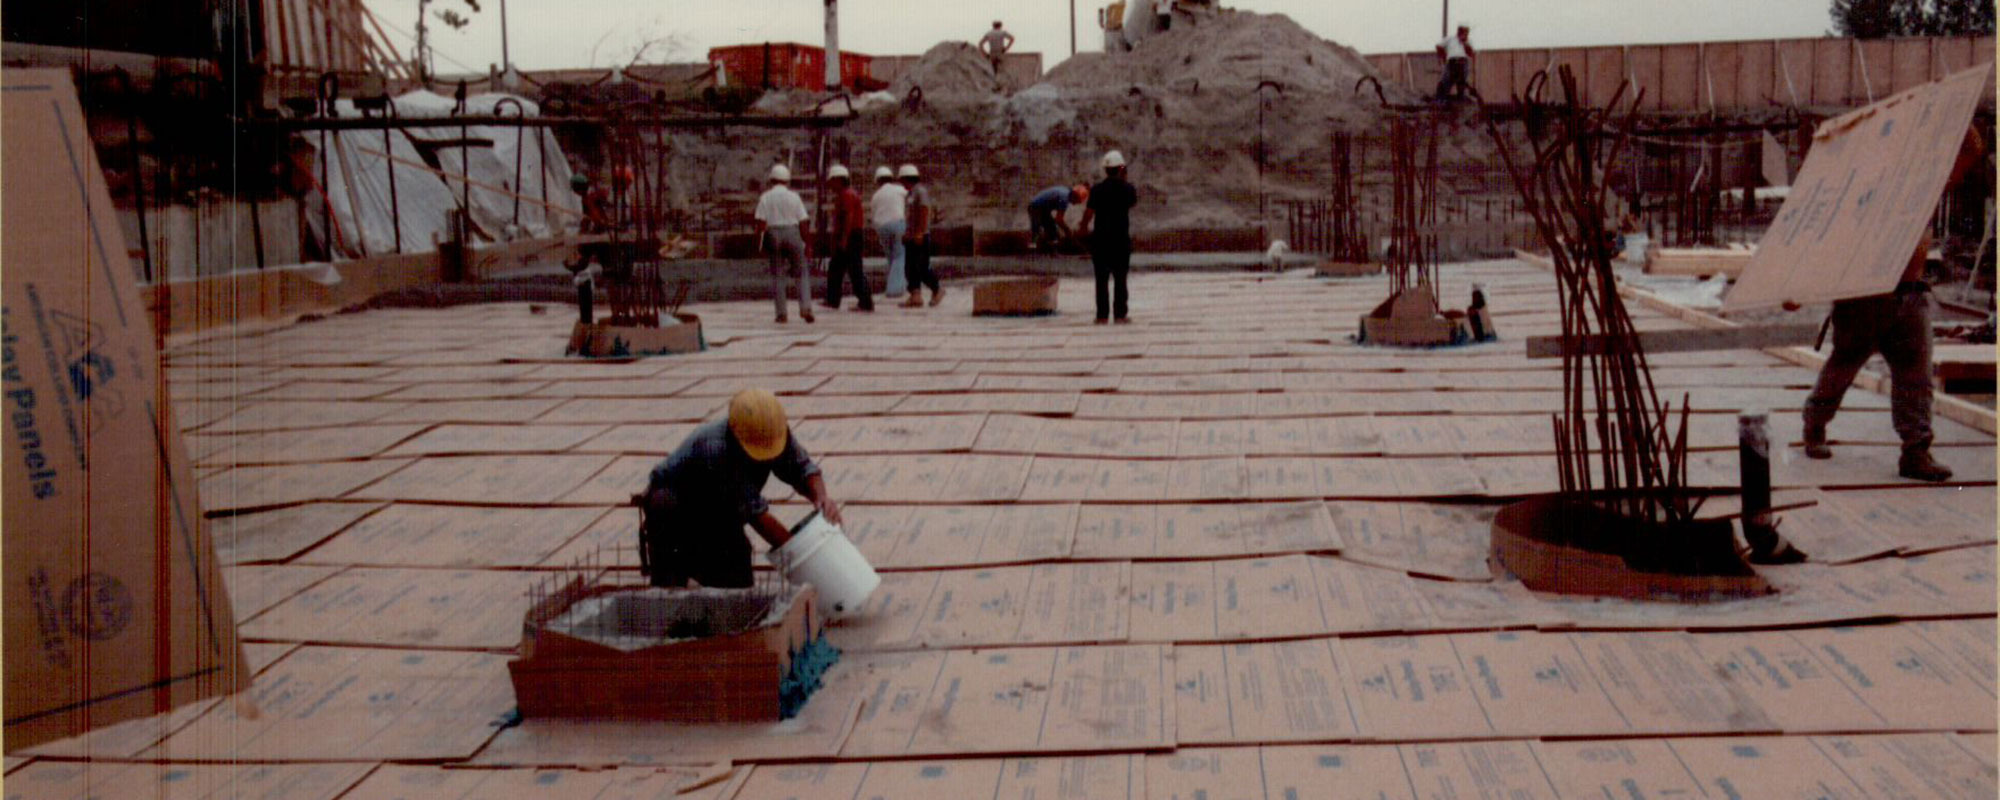 Volclay Panels waterproofing below grade foundations in Toronto in the mid 1980s